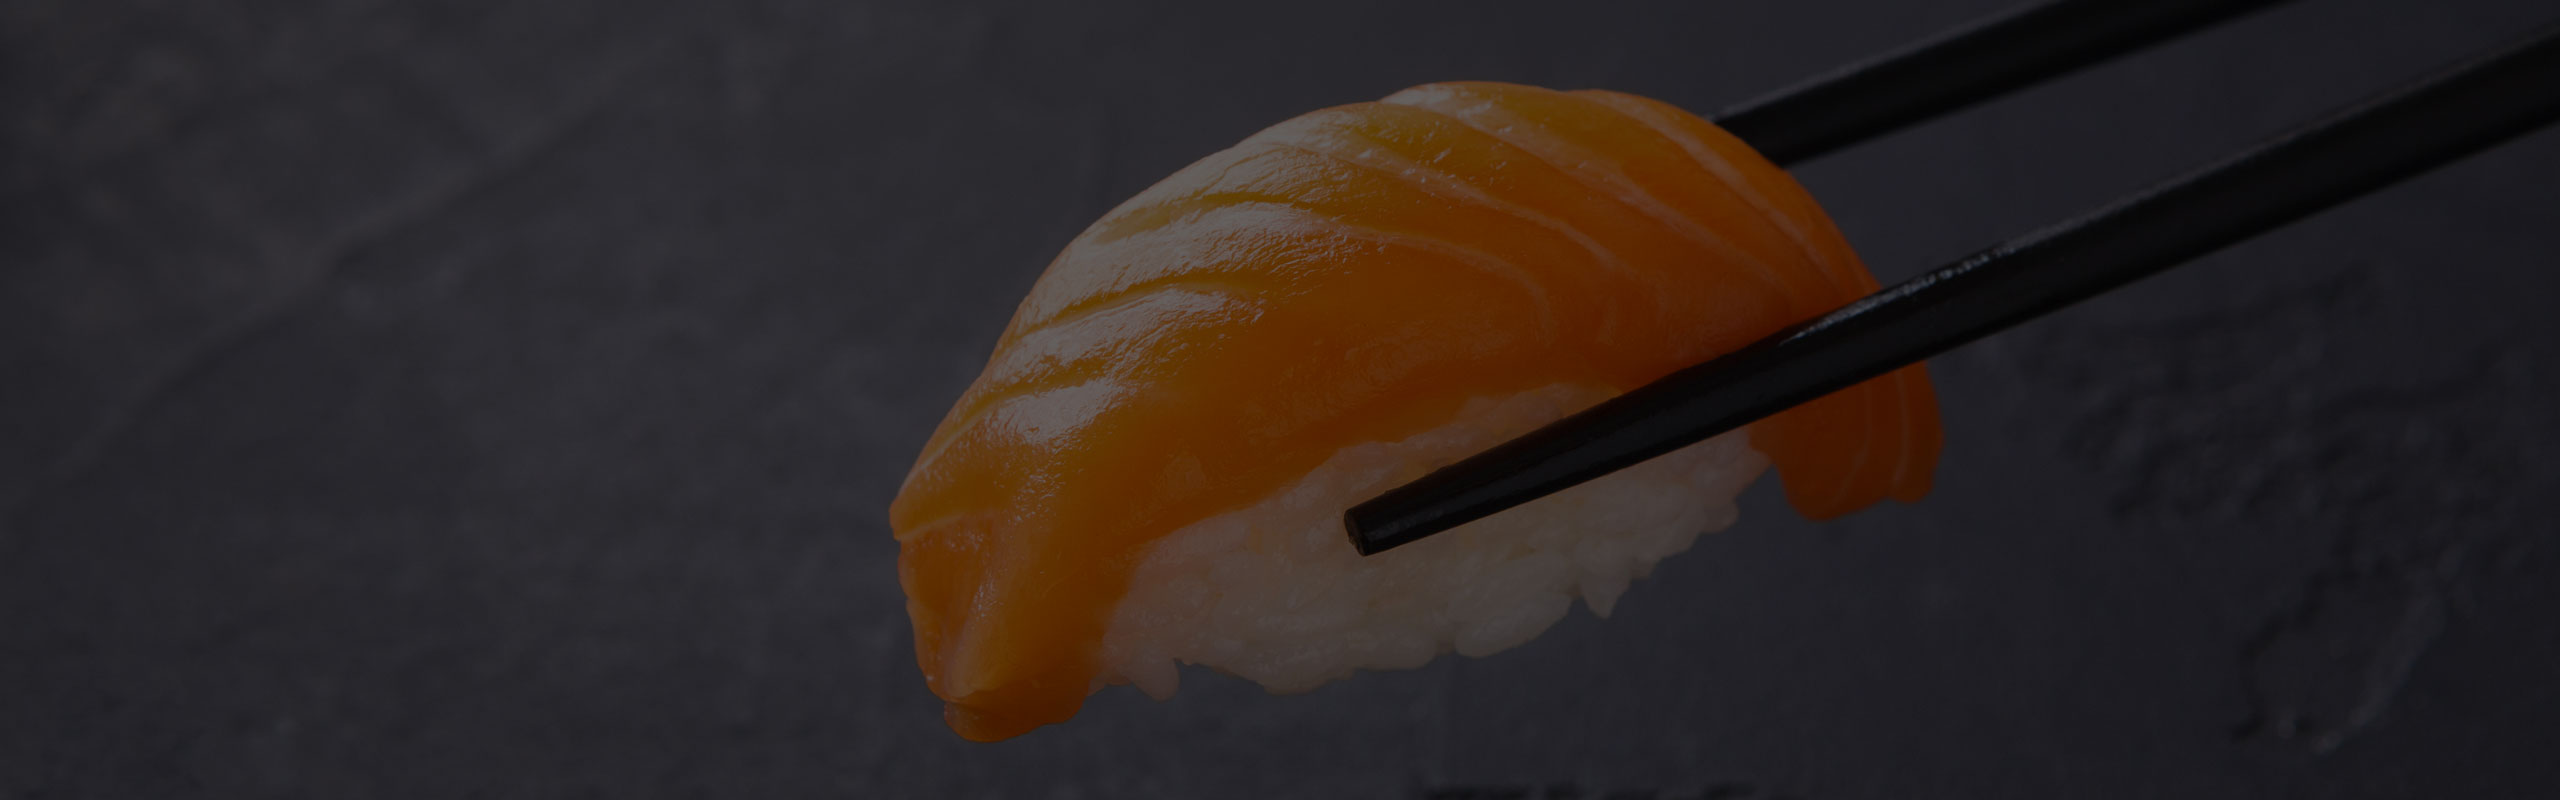 banniere-sushi-2